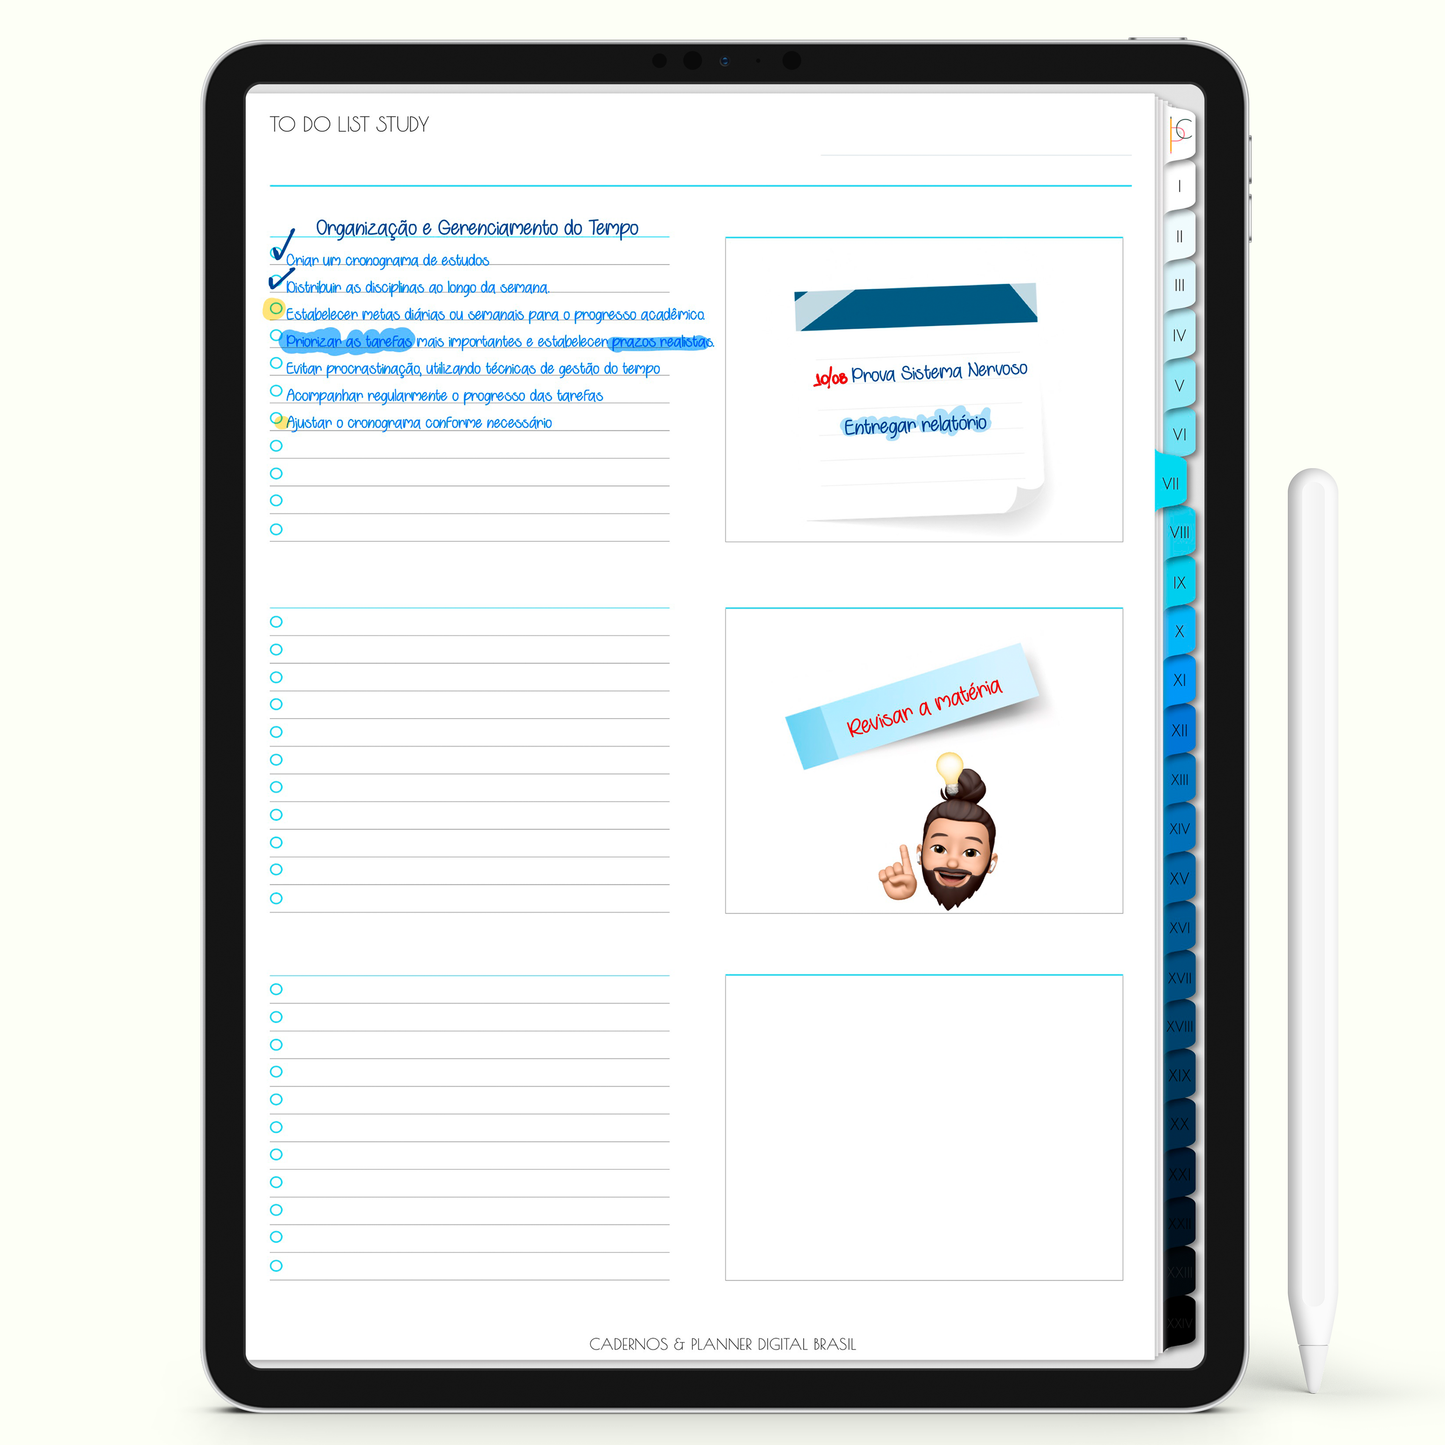 Caderno Digital 24 Matérias - página To Do List Study, caderno digital para iPad e Tablet Android. Cadernos & Planner Digital Brasil